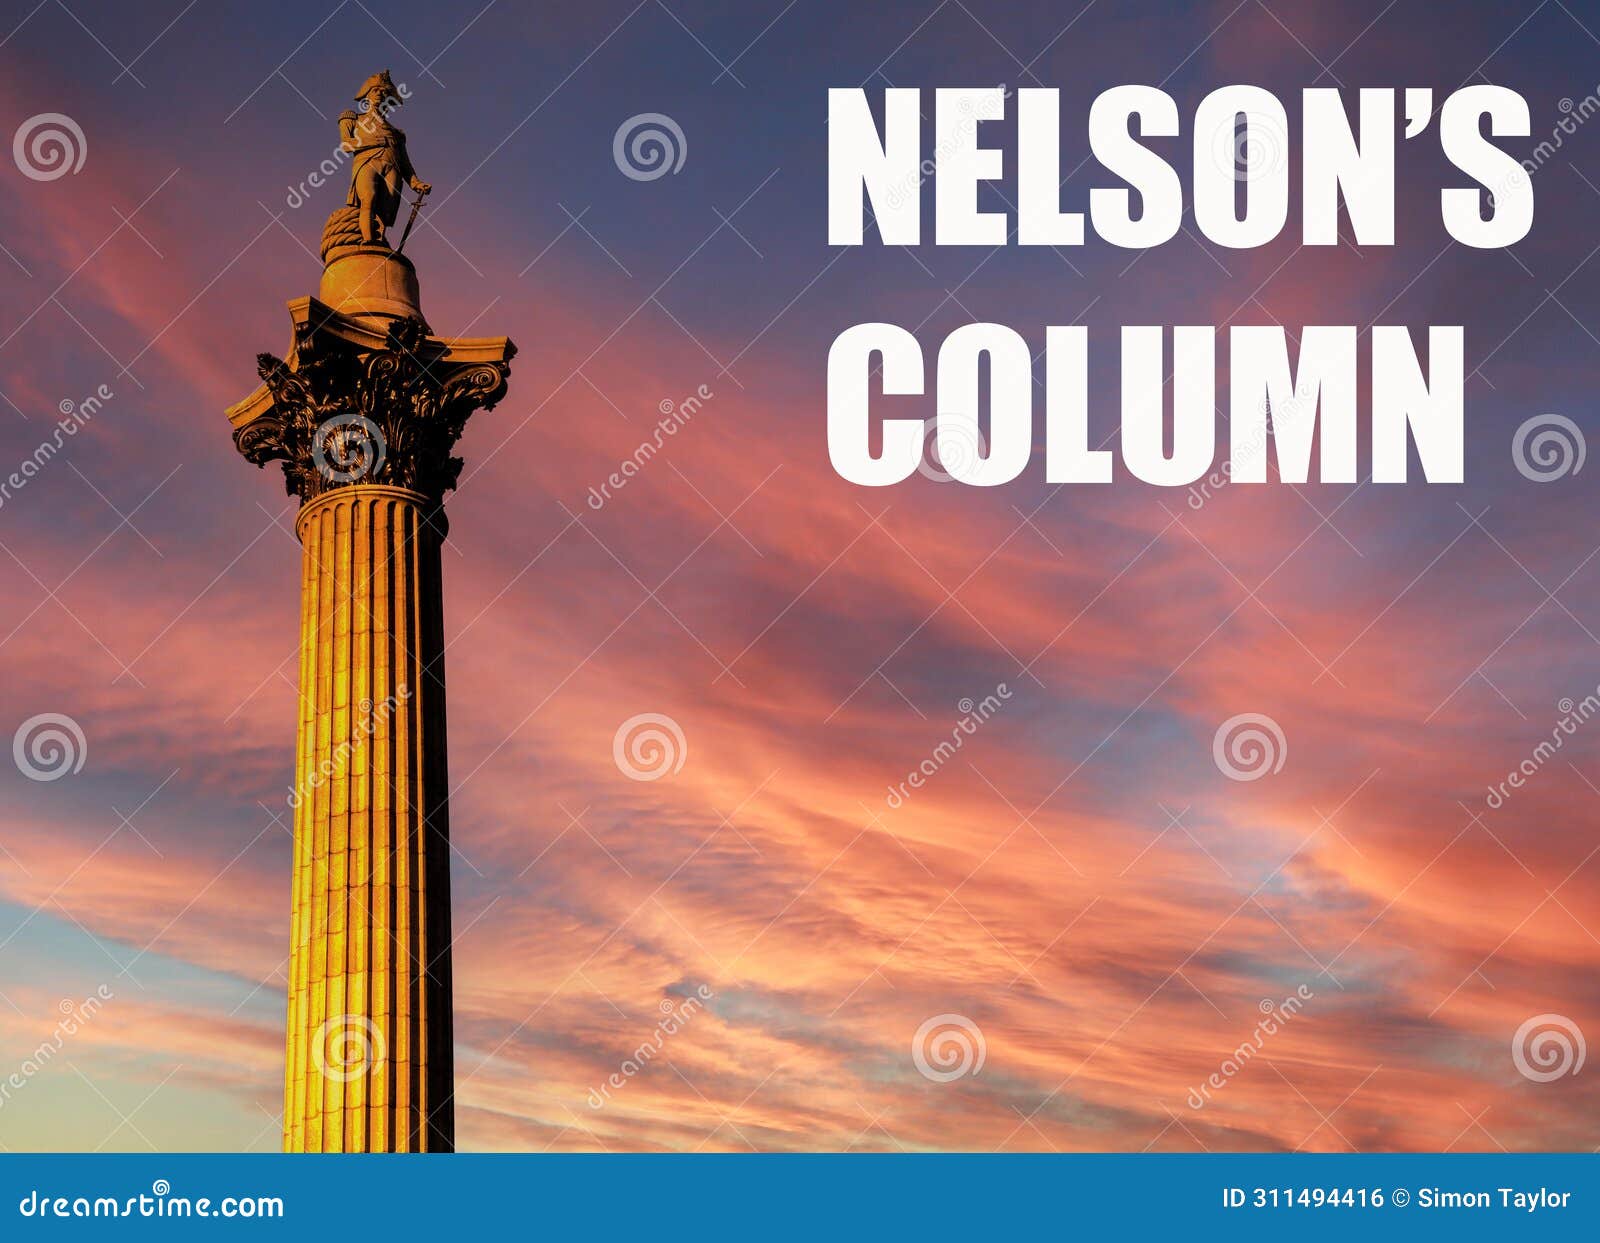 nelson's column - iconic london landmark situated in trafalgar square